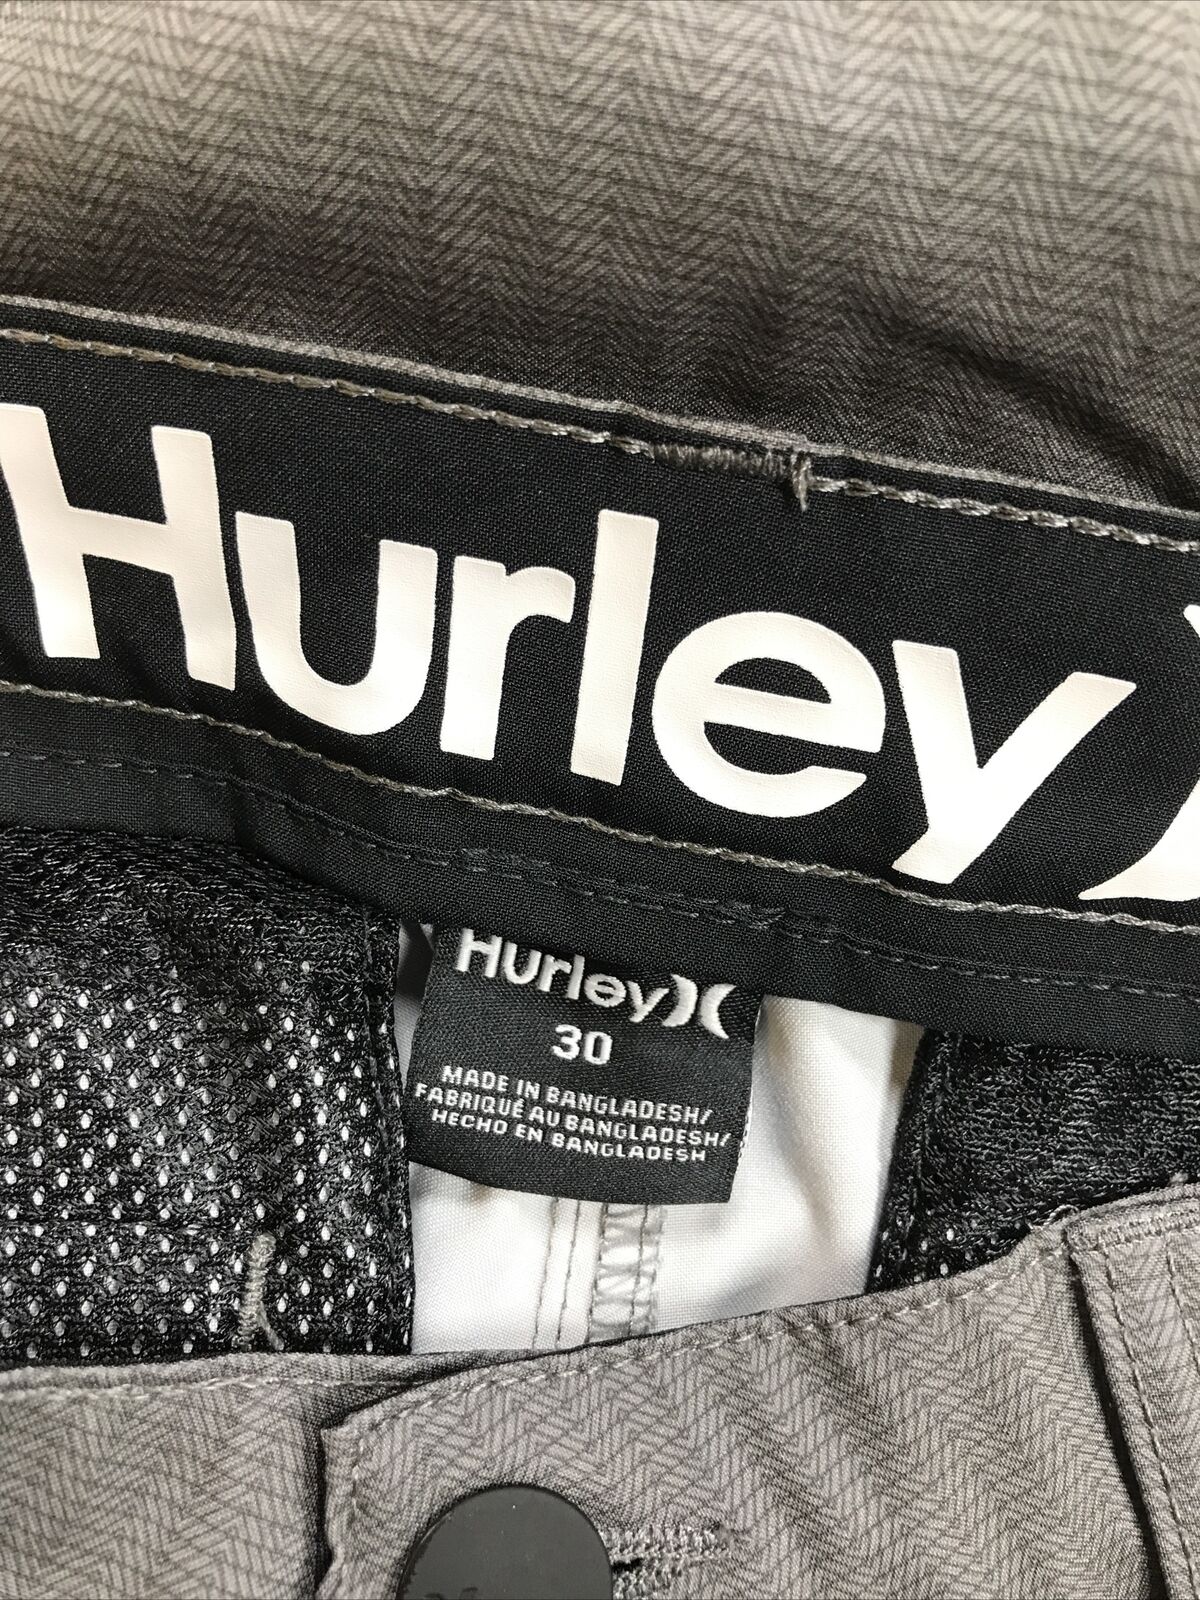 Hurley Men's Gray Polyester Hybrid Shorts w/ Pockets - 30